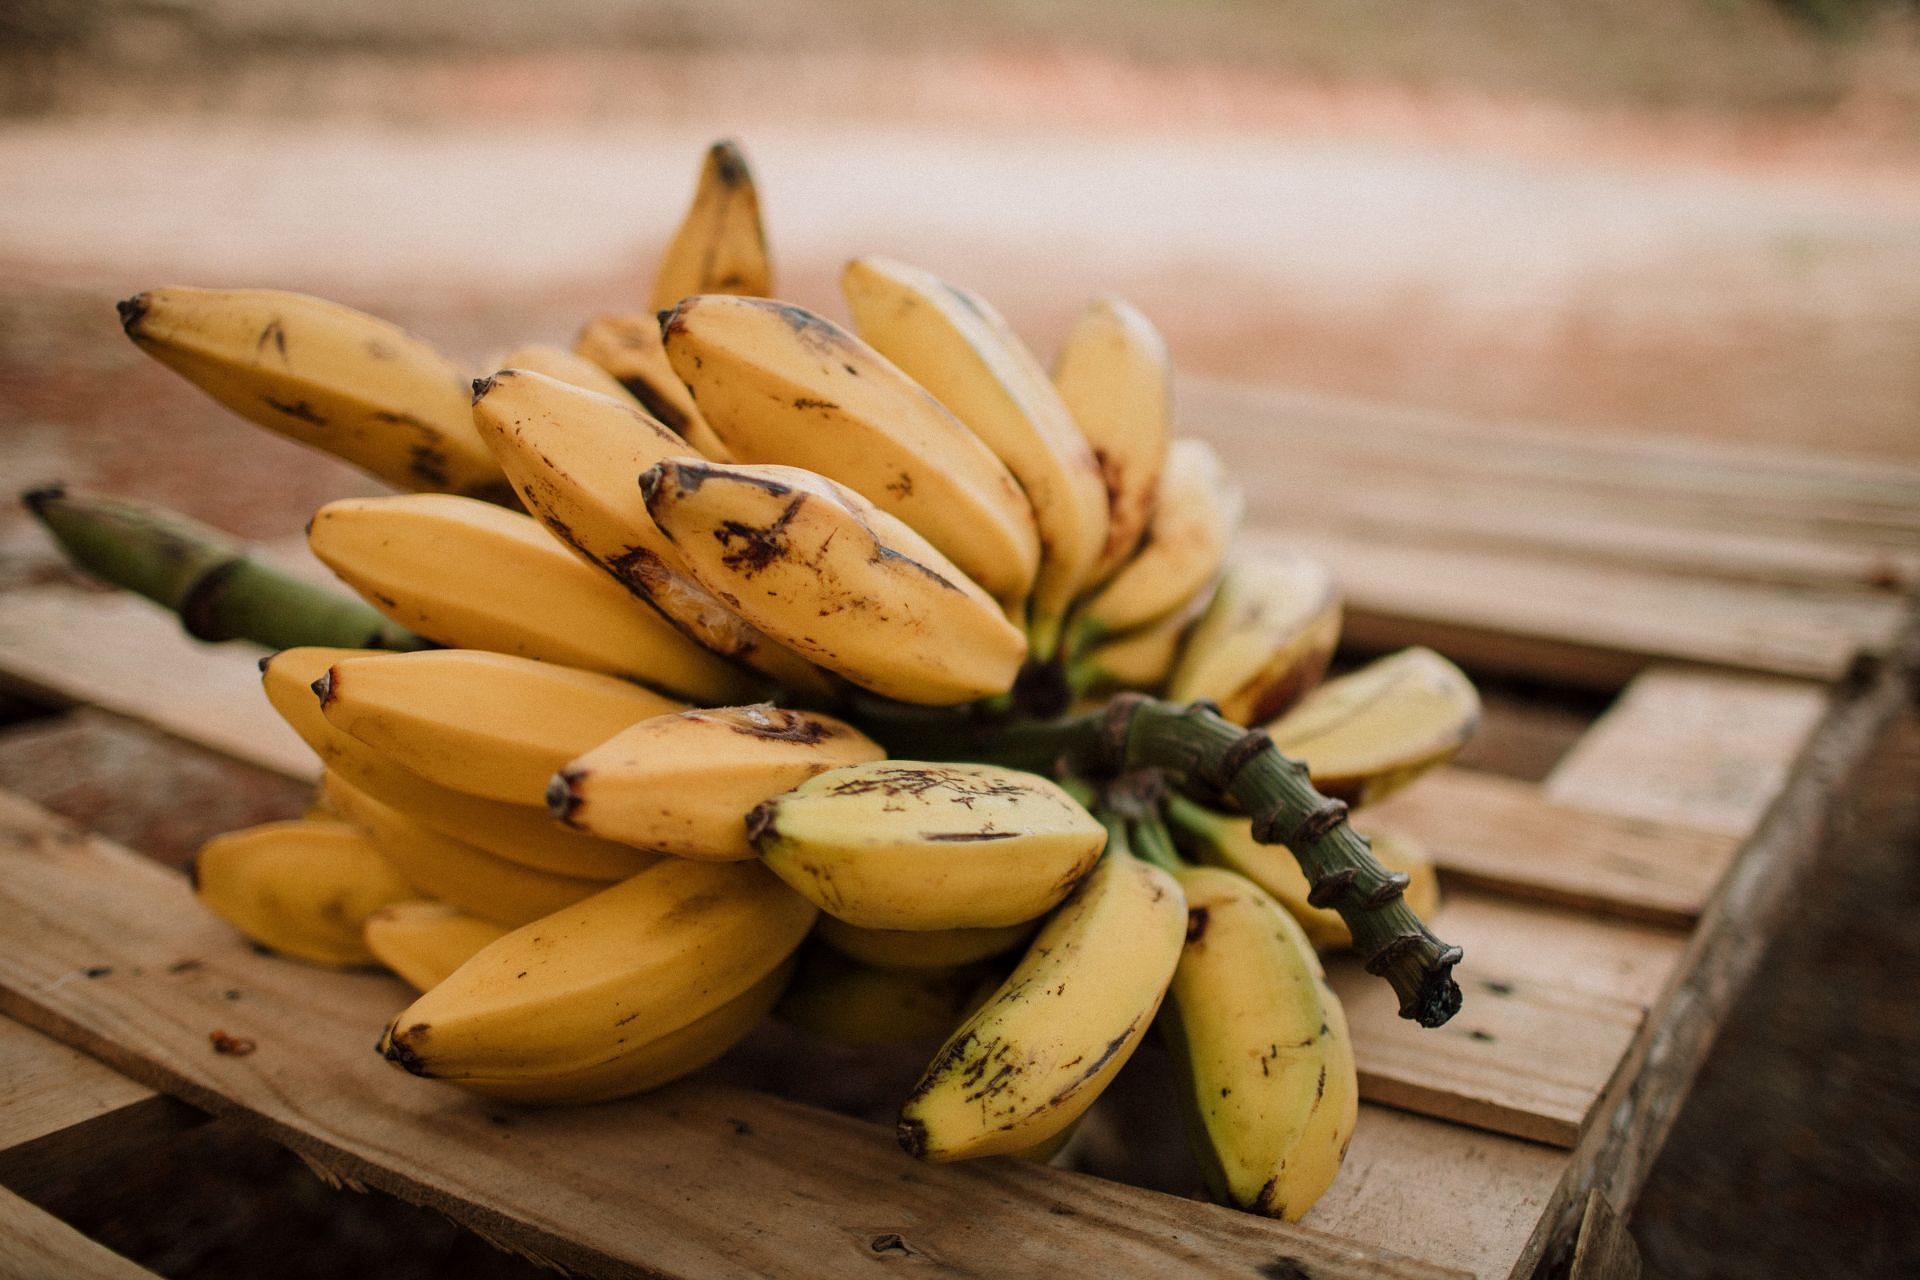  Incredible Health Benefits Of Bananas You Might Not Know. (Image via Pexels / Luis Quintero)